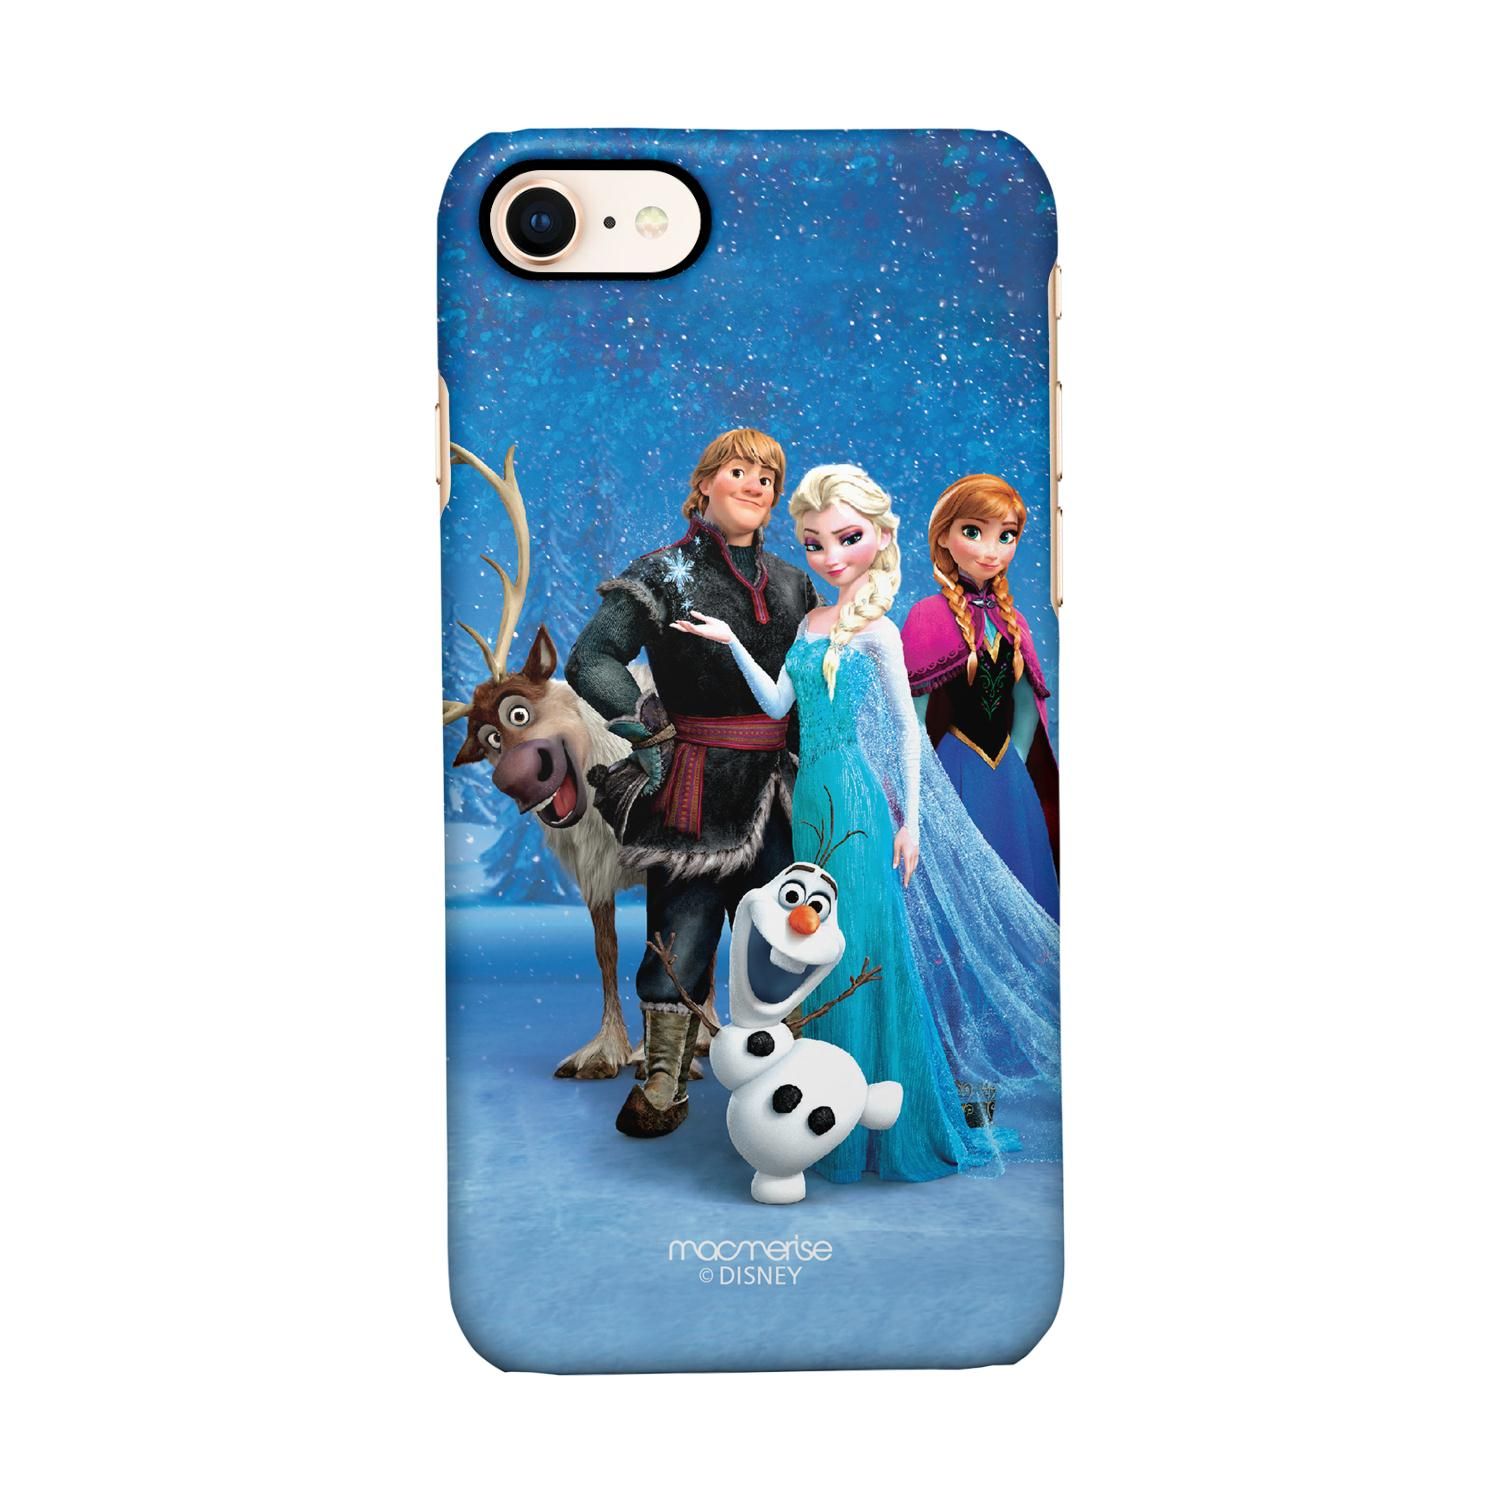 Buy Frozen together - Sleek Phone Case for iPhone 8 Online